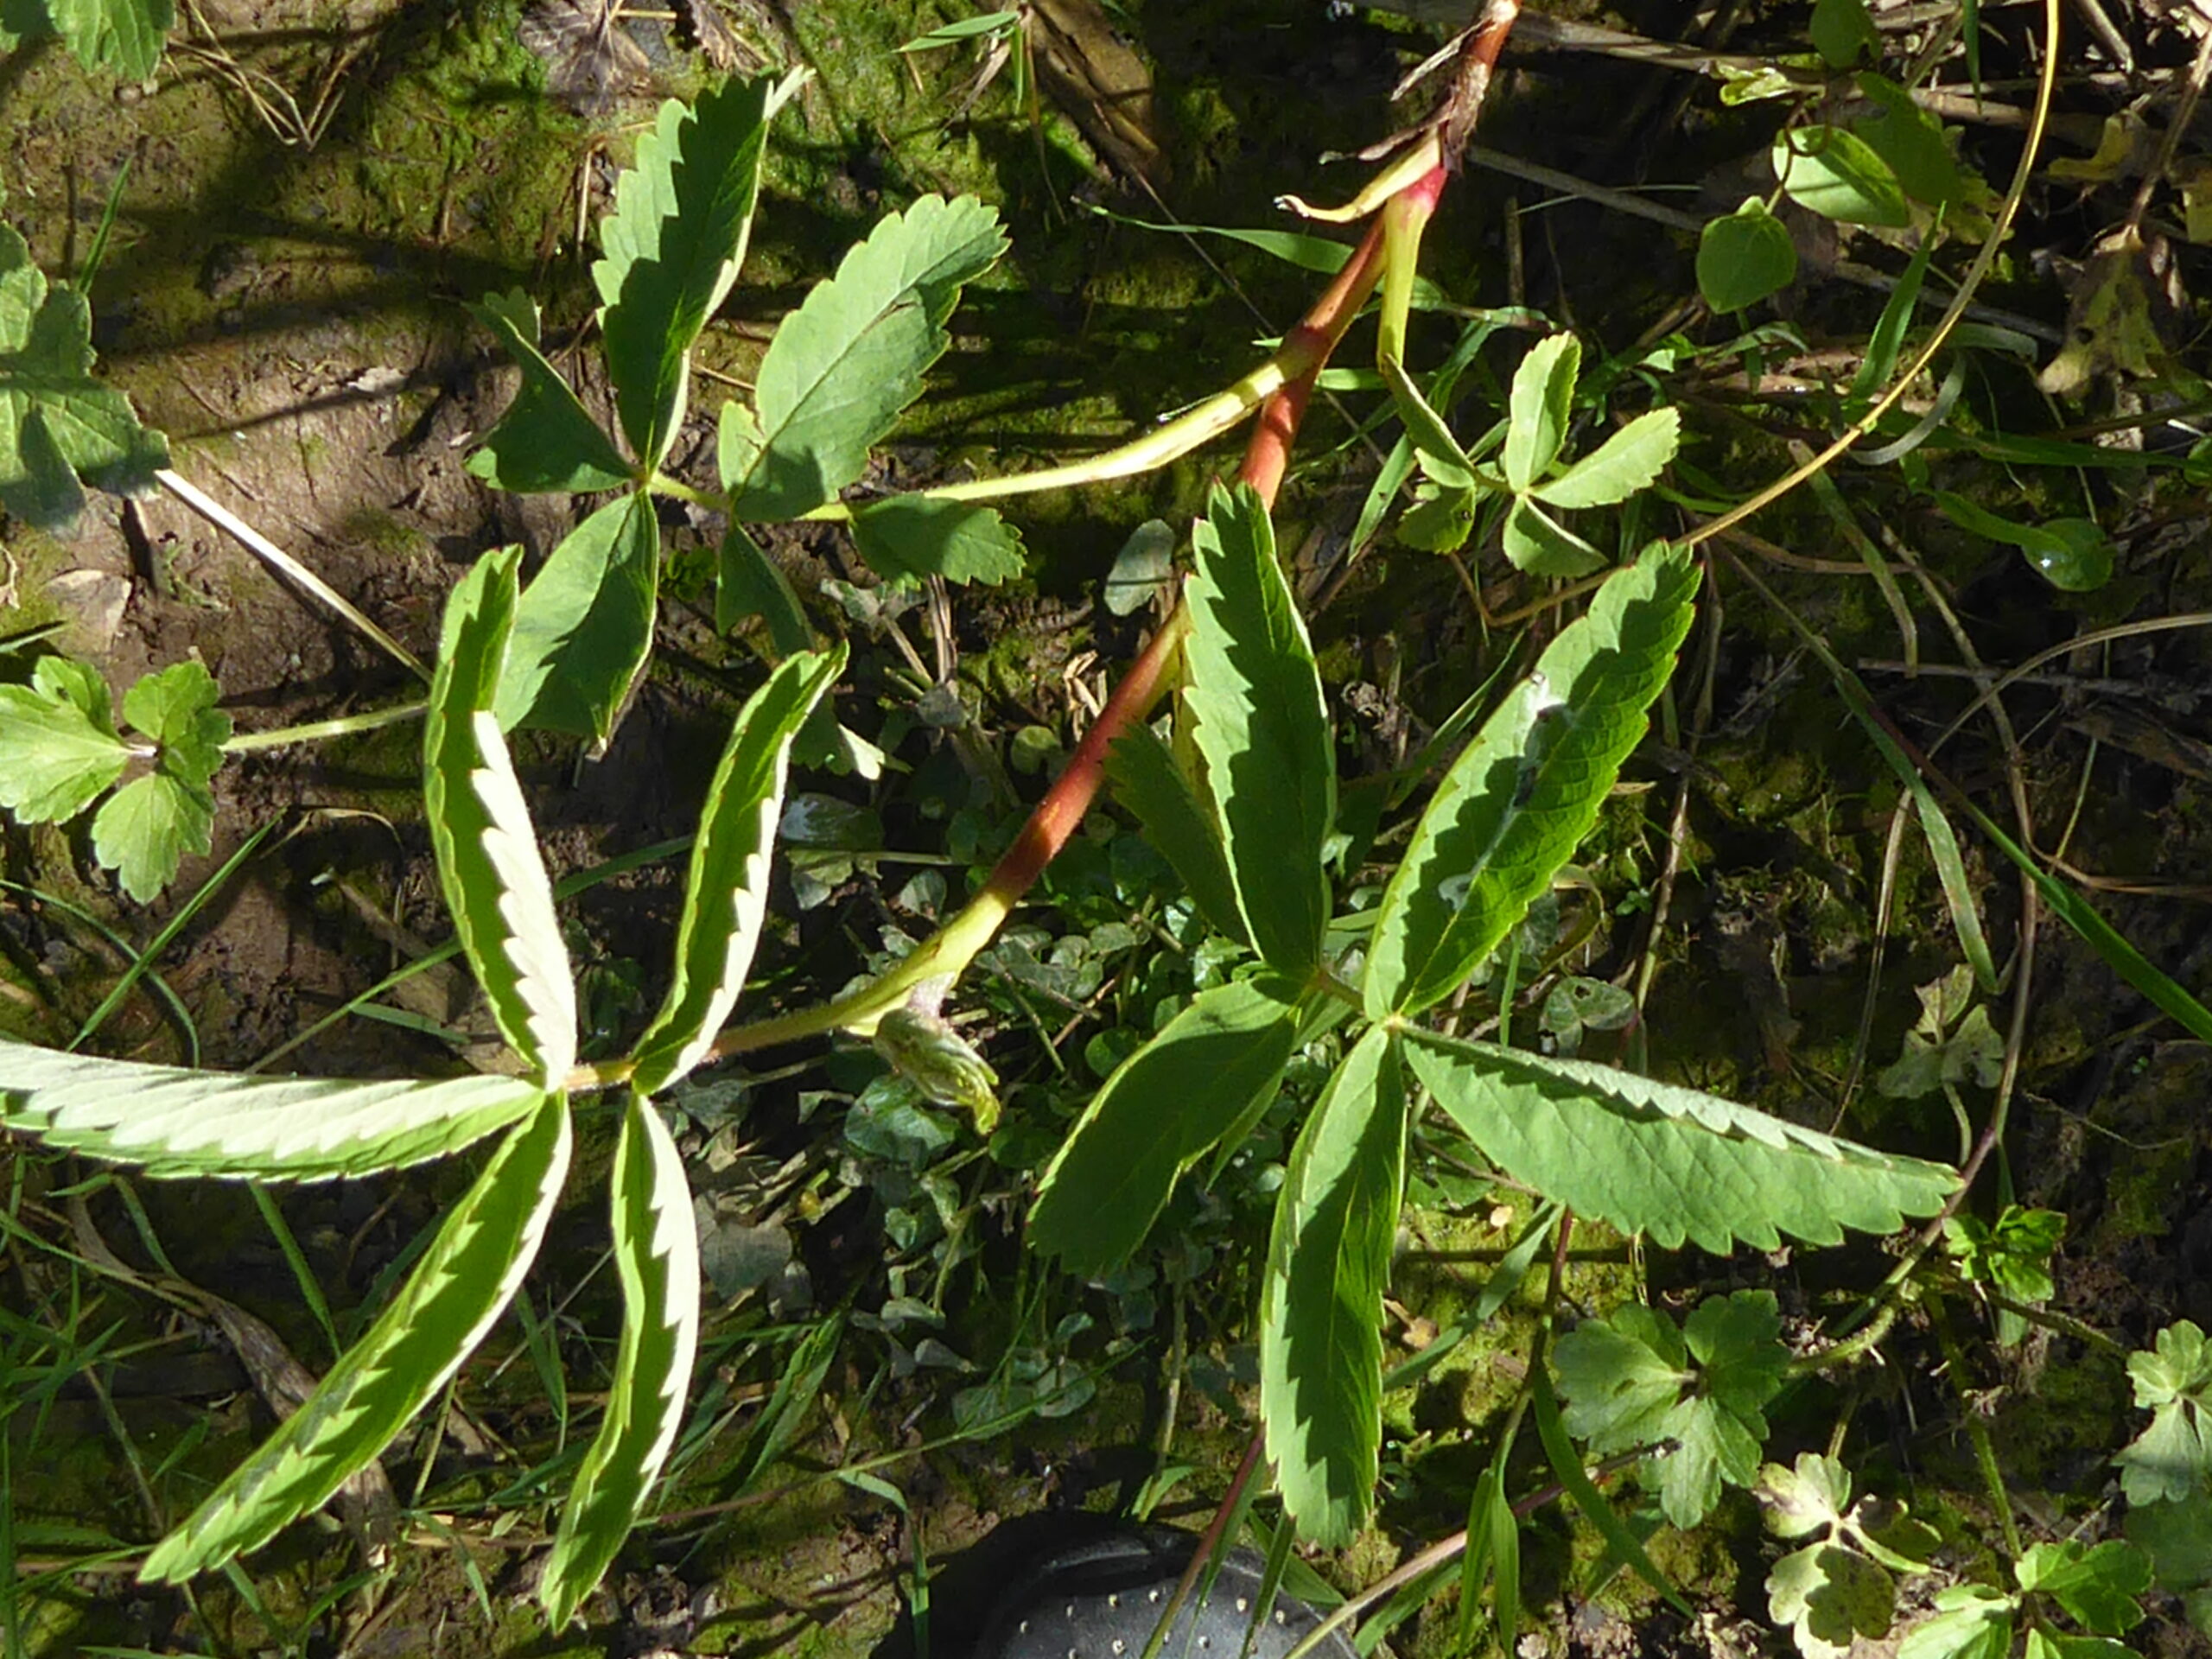 Marsh Cinquefoil (Potentilla palustris)